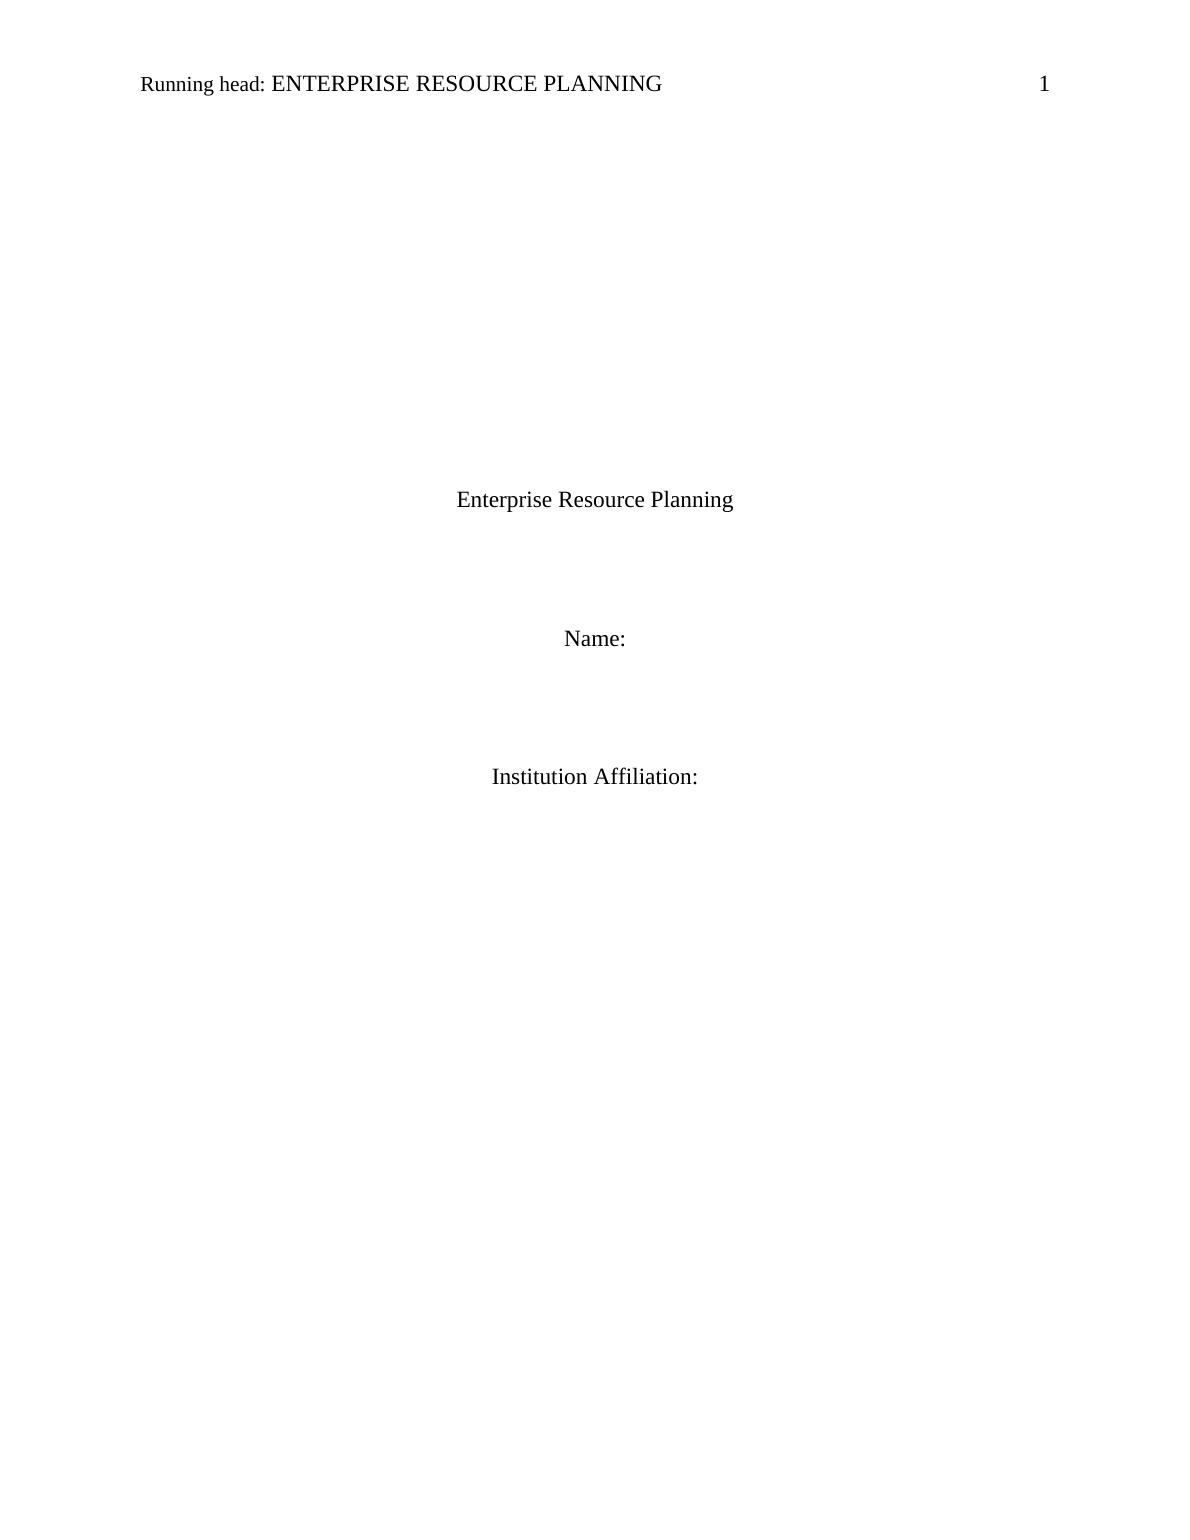 Enterprise Resource Planning (ERP) Assignment_1